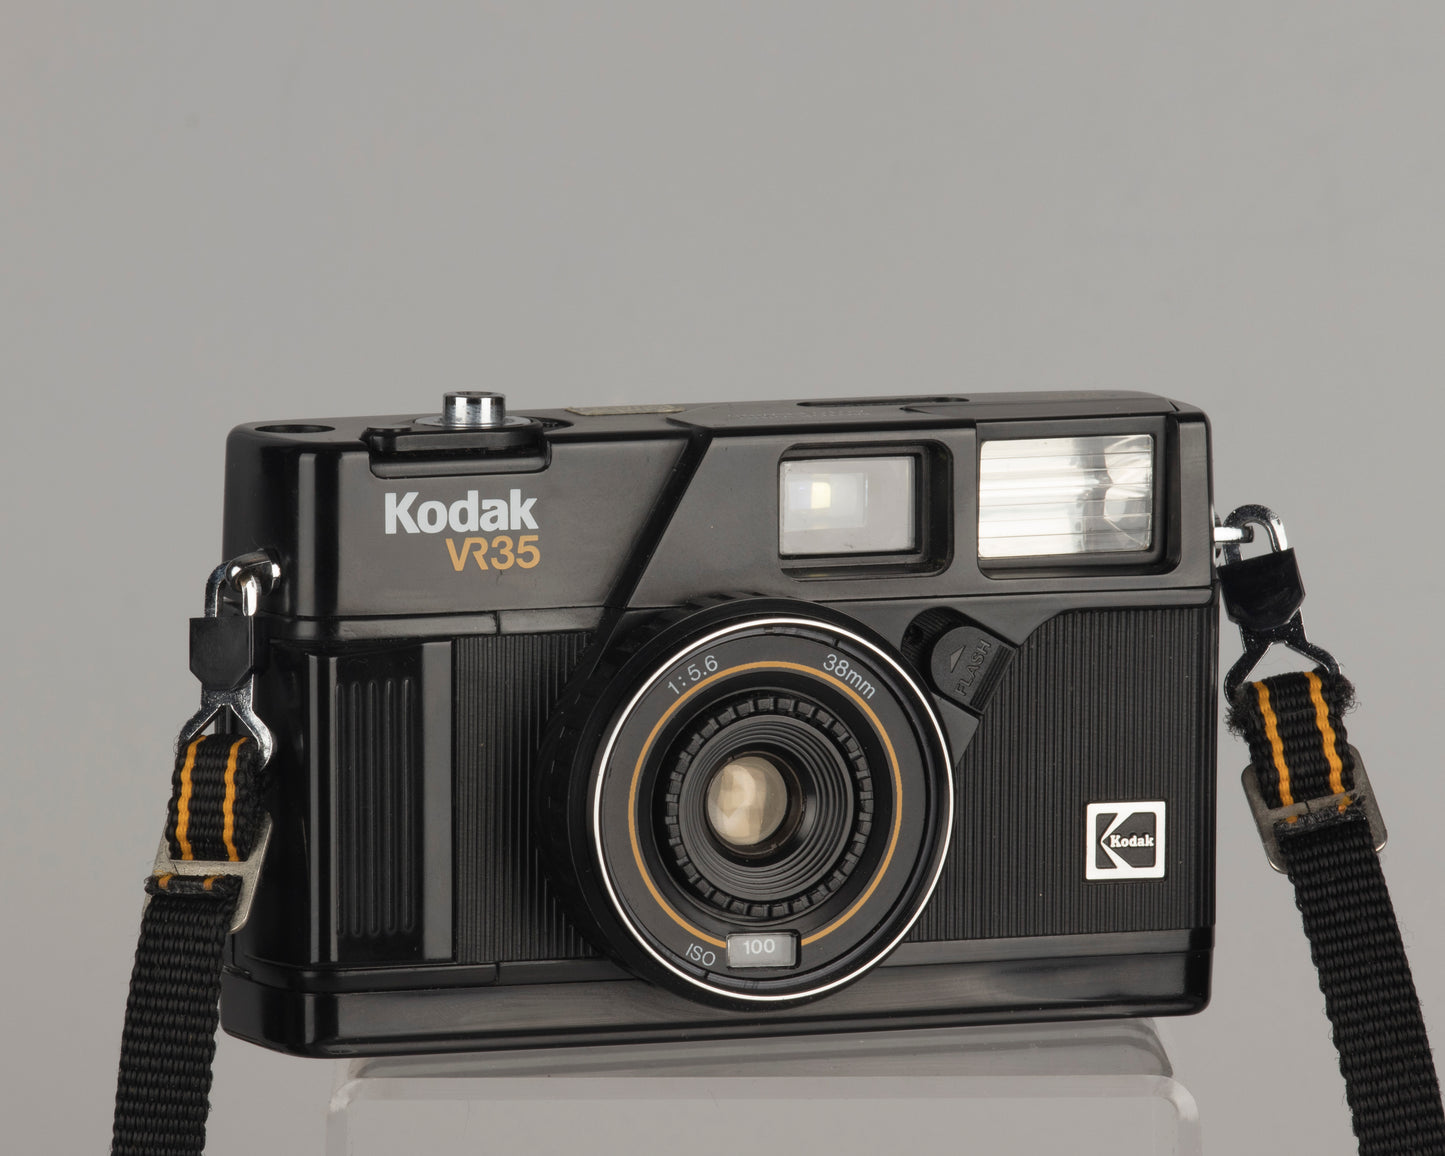 The Kodak VR35 K5 point-and-shoot camera from 1986